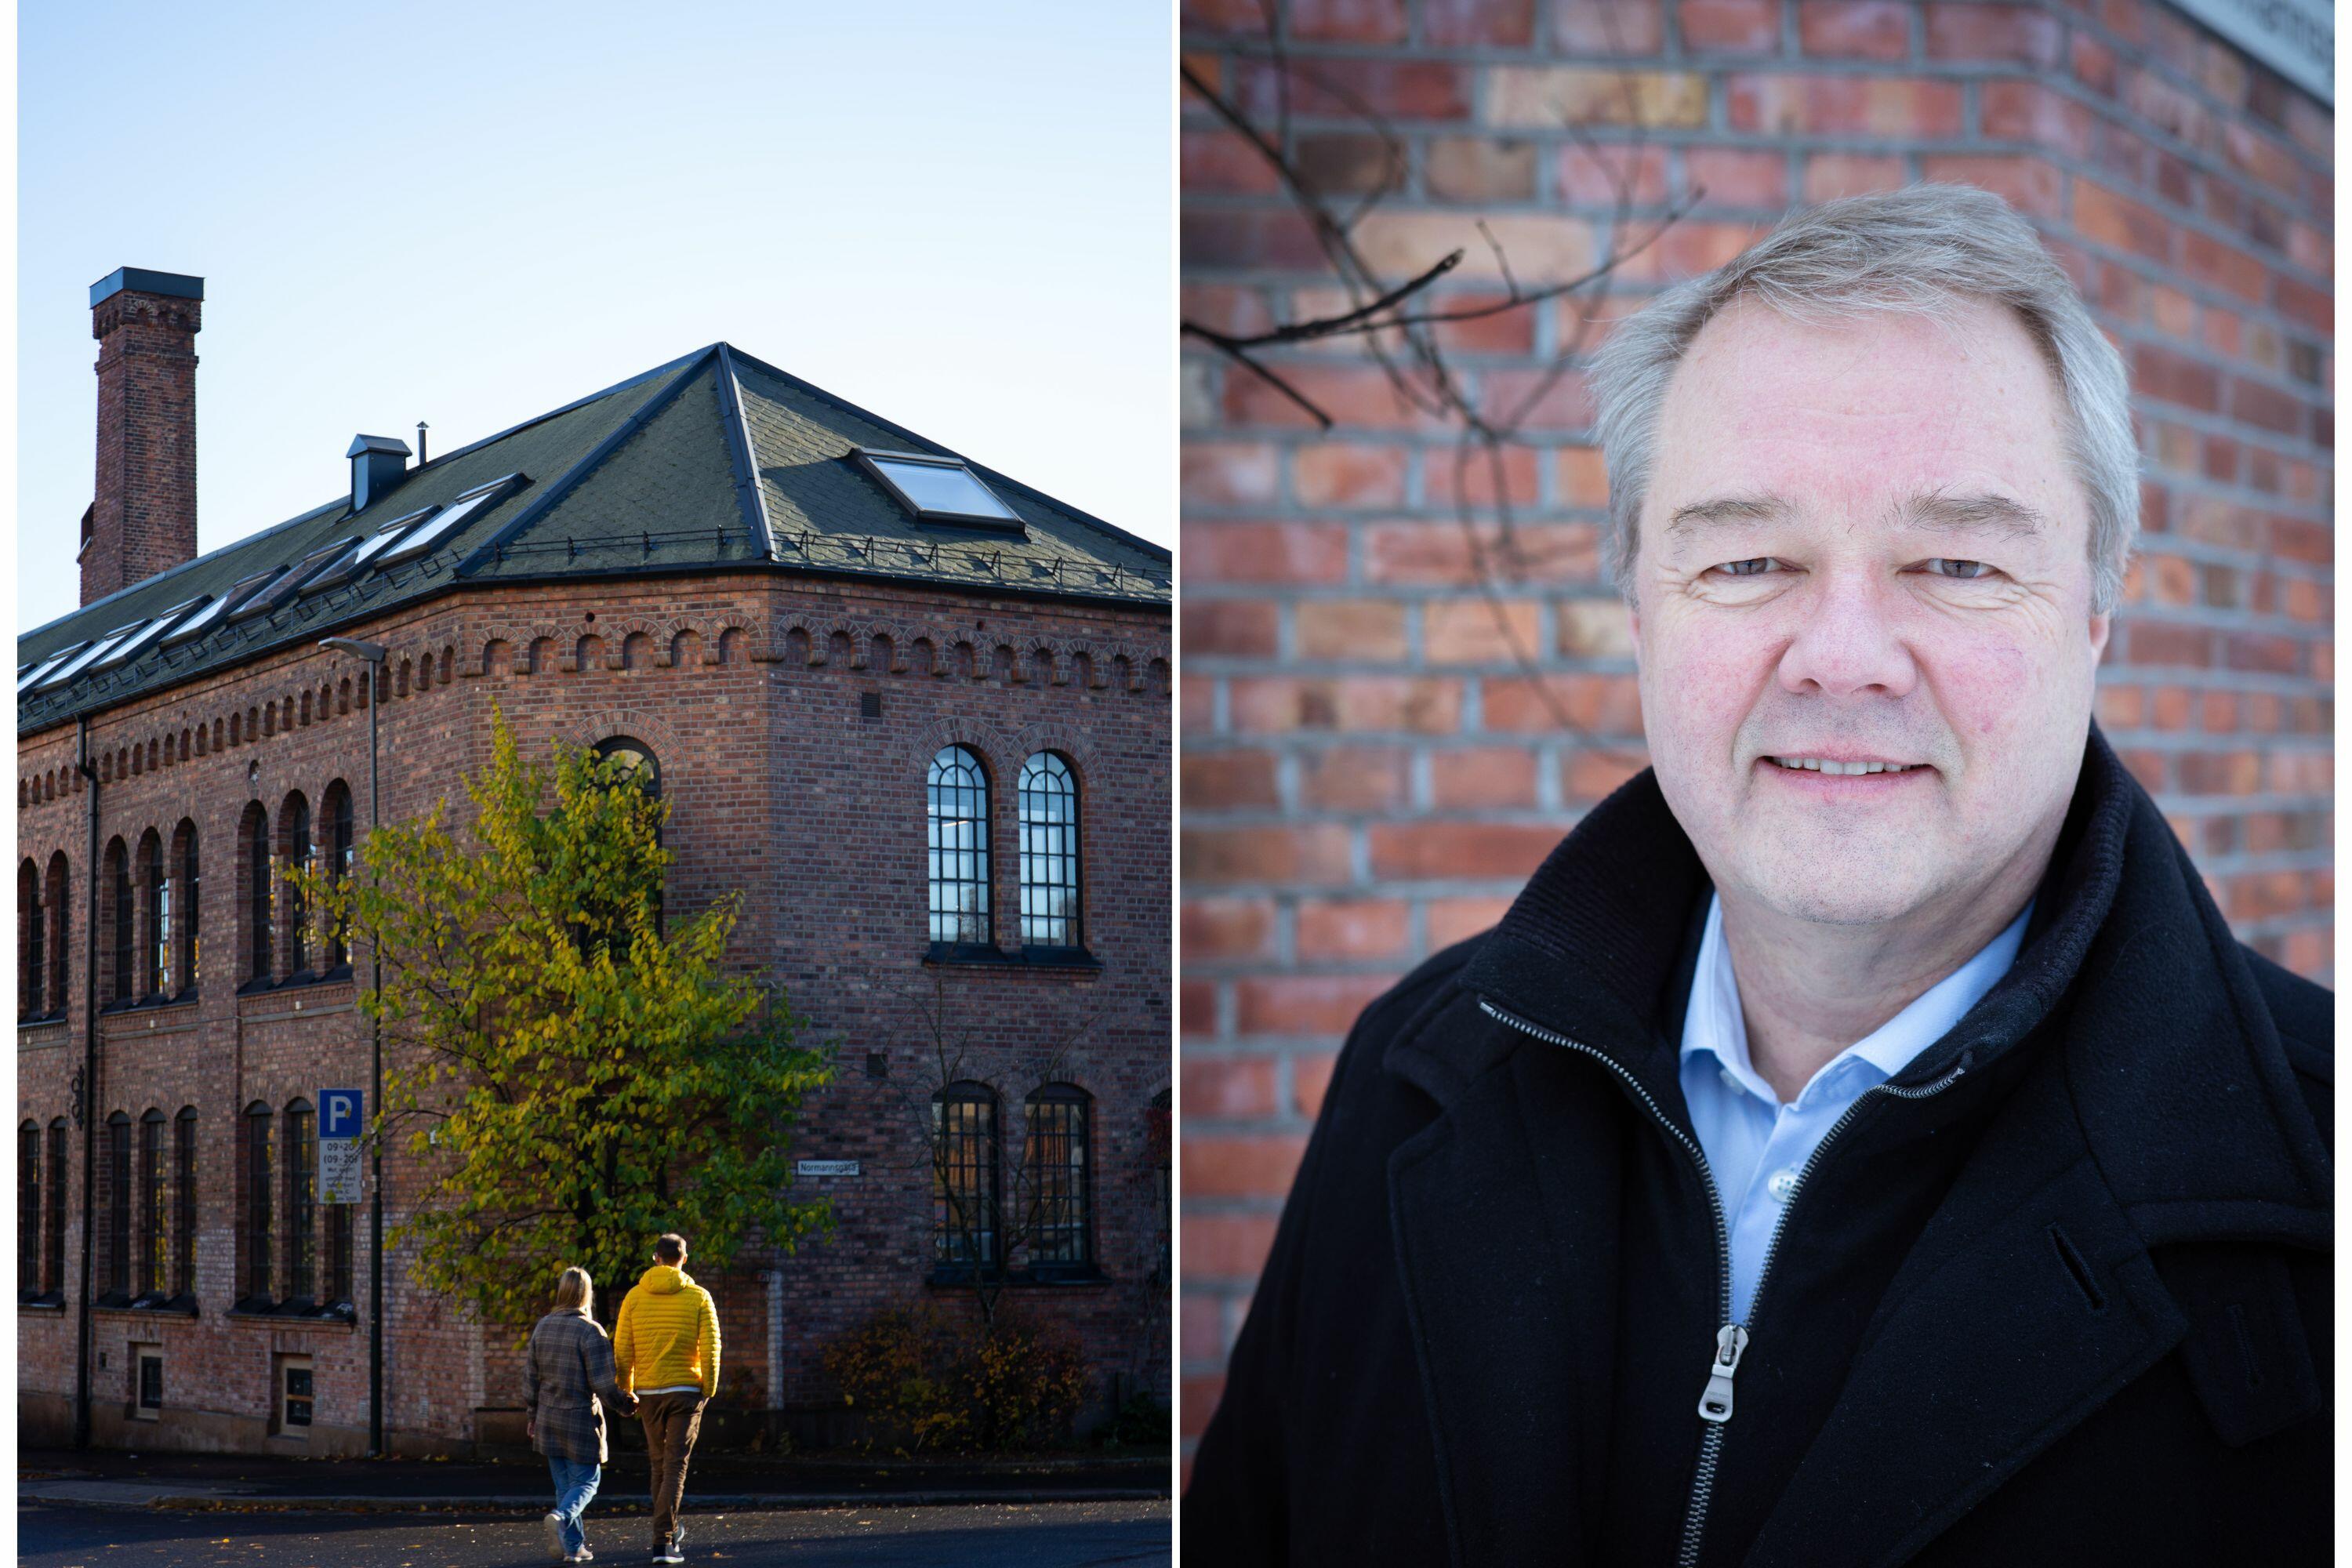 Tyrilisenteret i Oslo og styreleder i Tyrili, Sven Petter Omdal.